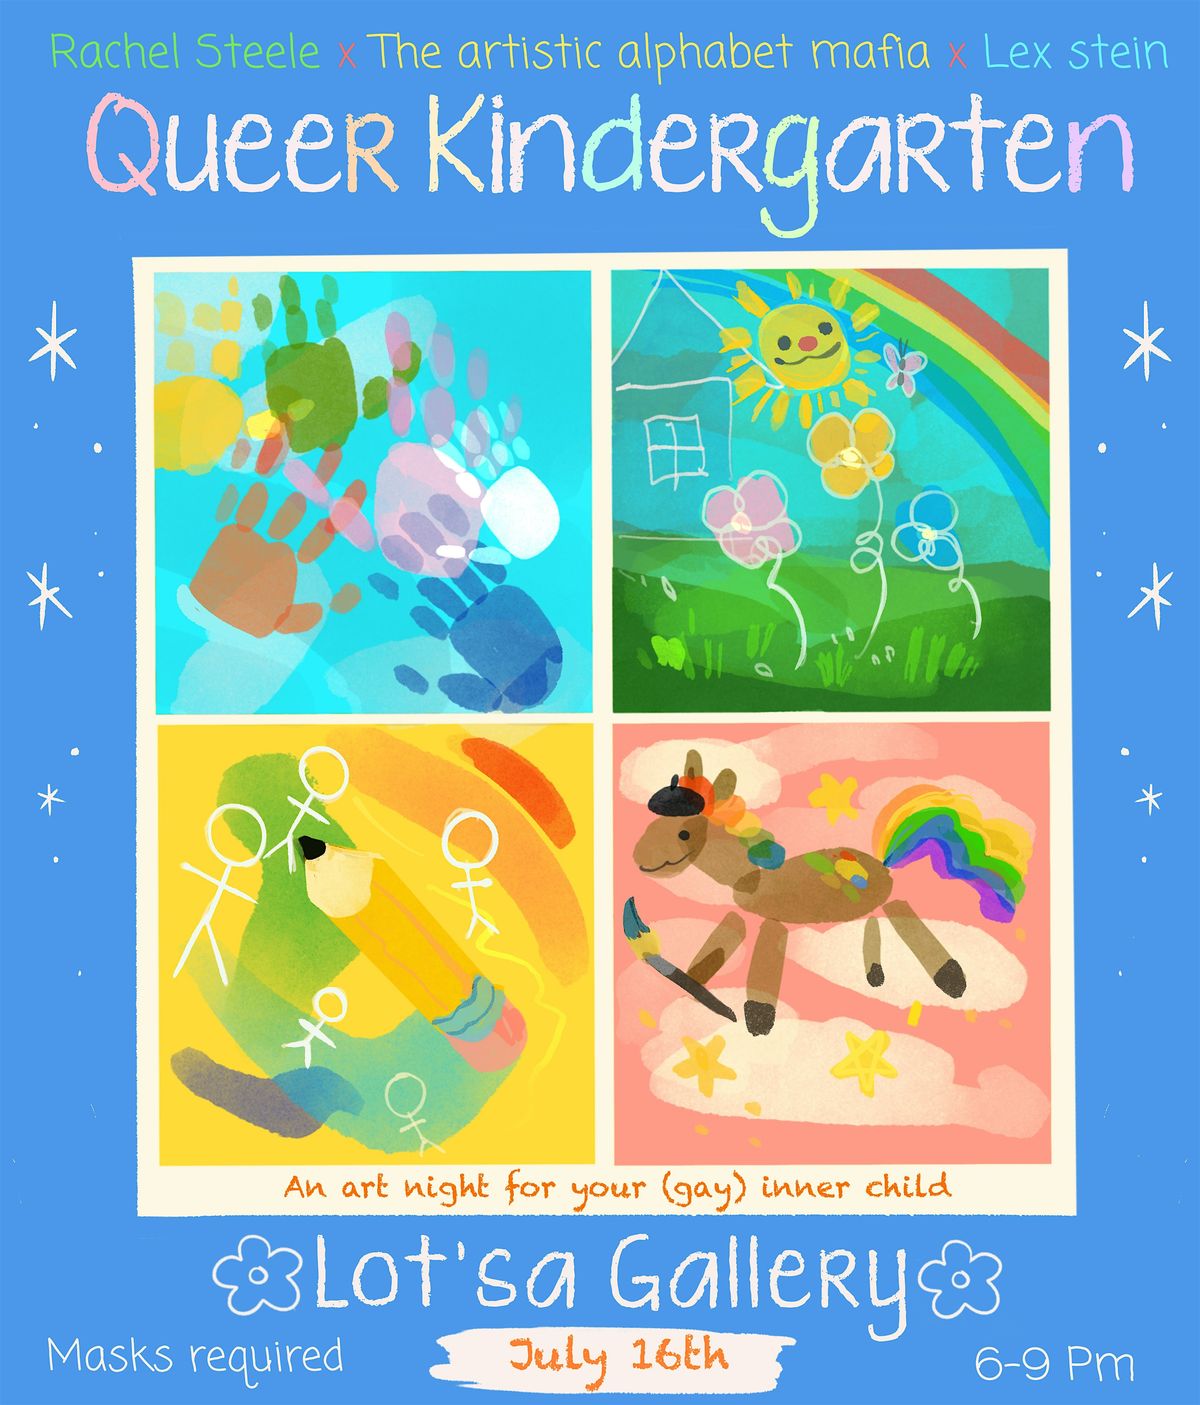 Queer Kindergarten: A celebration of your (gay) inner child